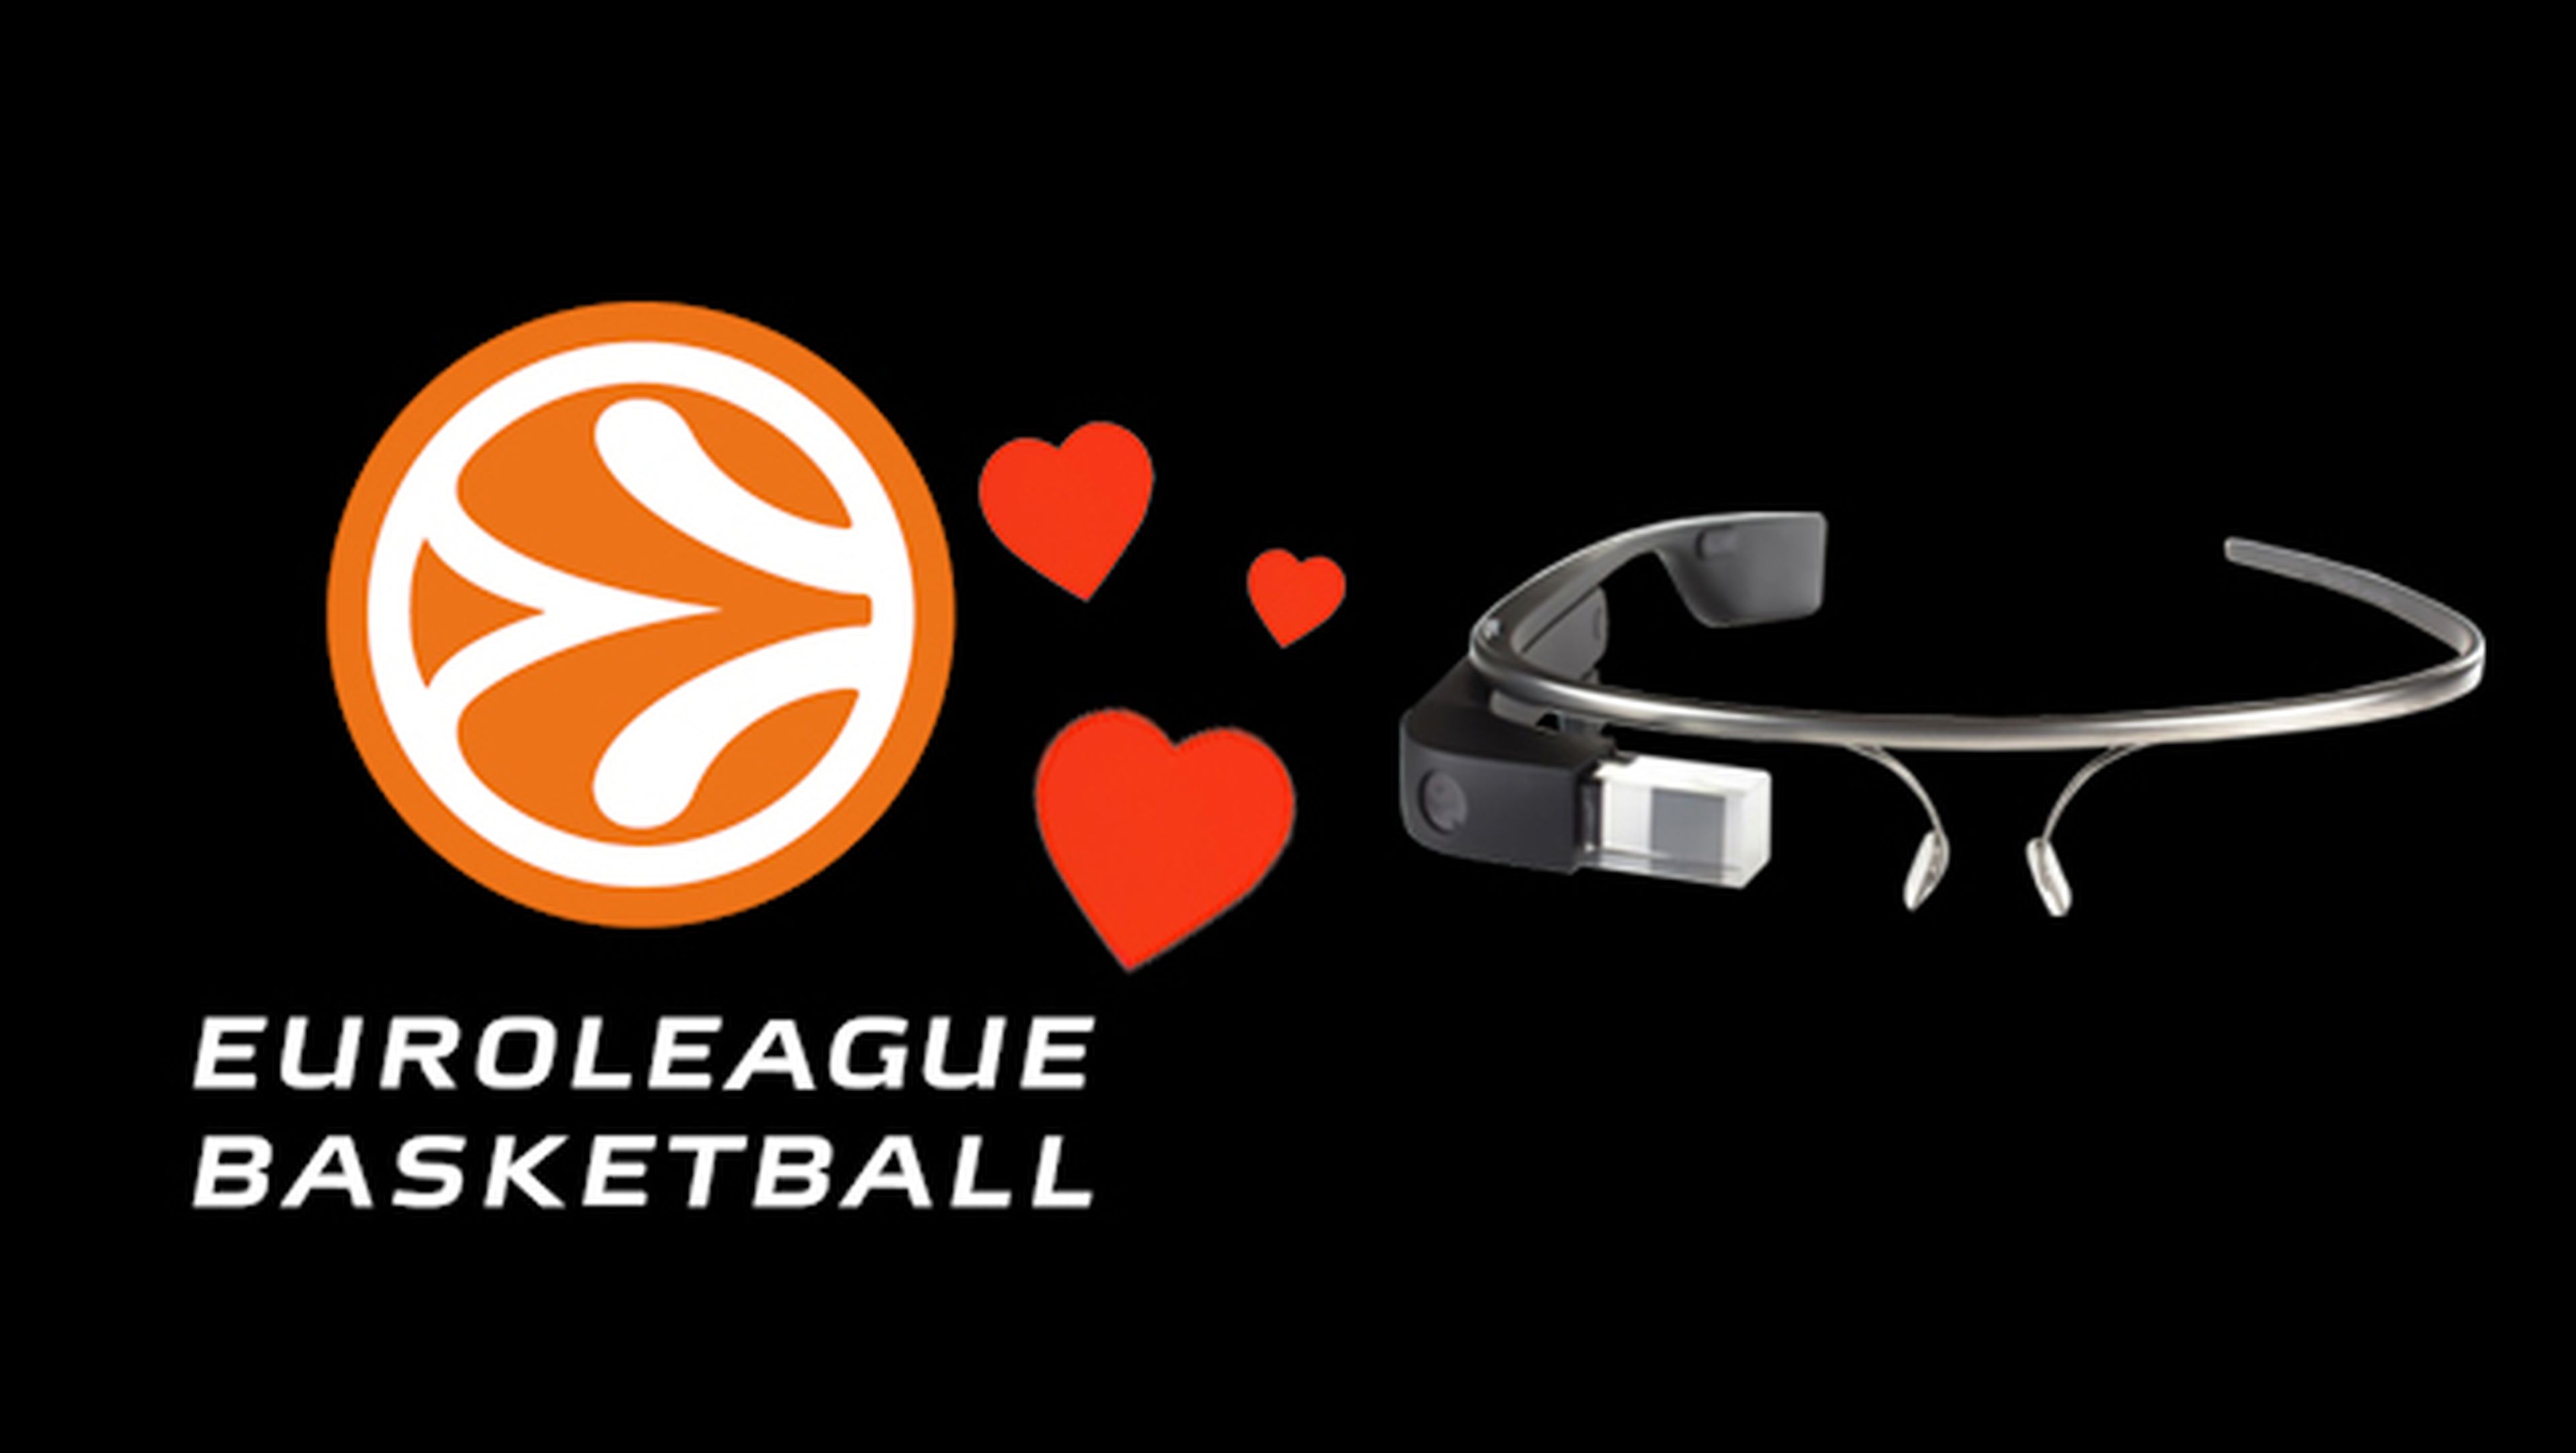 Las Google Glass llegan a la euroliga de baloncesto